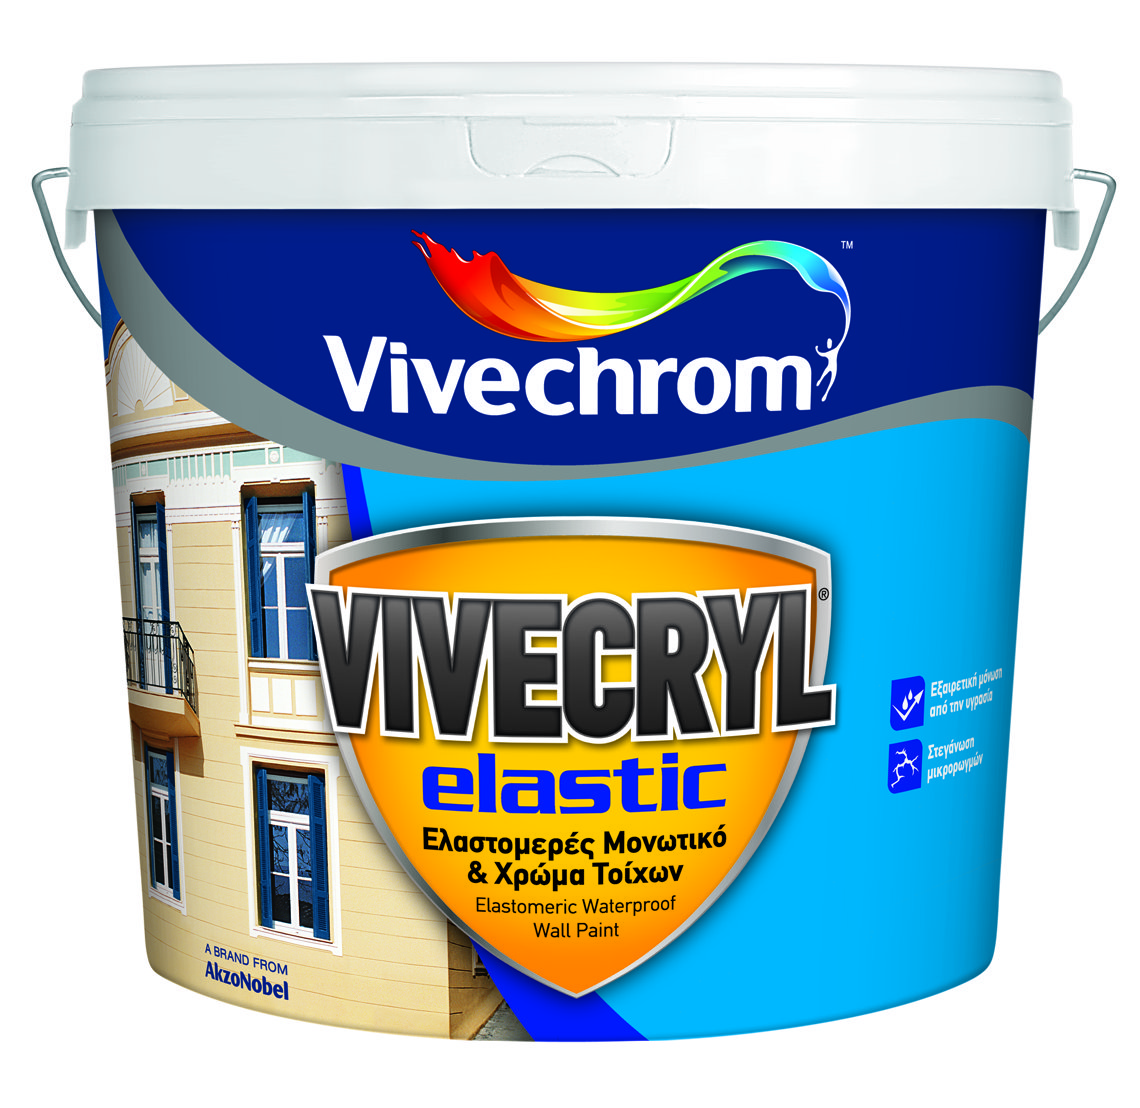 Vivechrom Vivecryl Ελαστομερές Οικολογικό Ακρυλικό Χρώμα Matt Finish Λευκό 10L